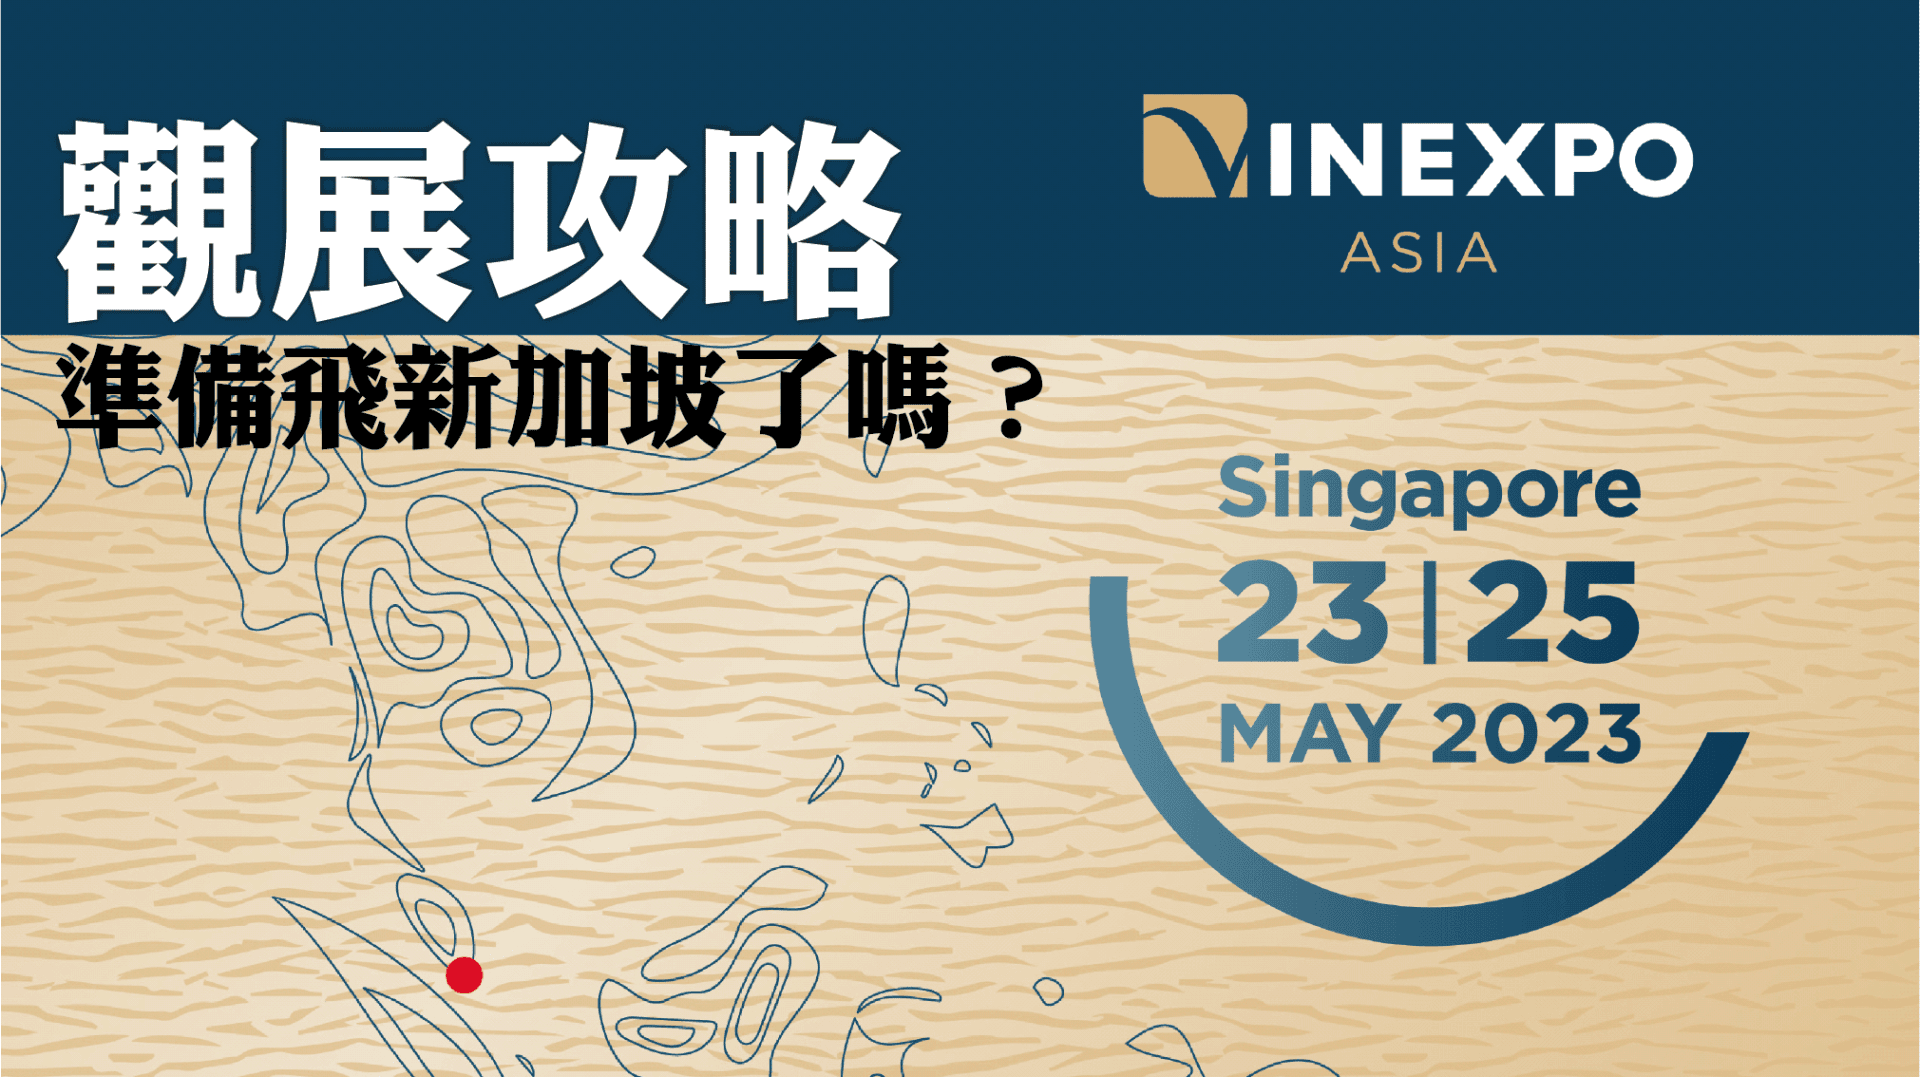 Vinexpo Asia 2023 ✈️ 準備飛新加坡了嗎？ - WineNow HK 專欄文章